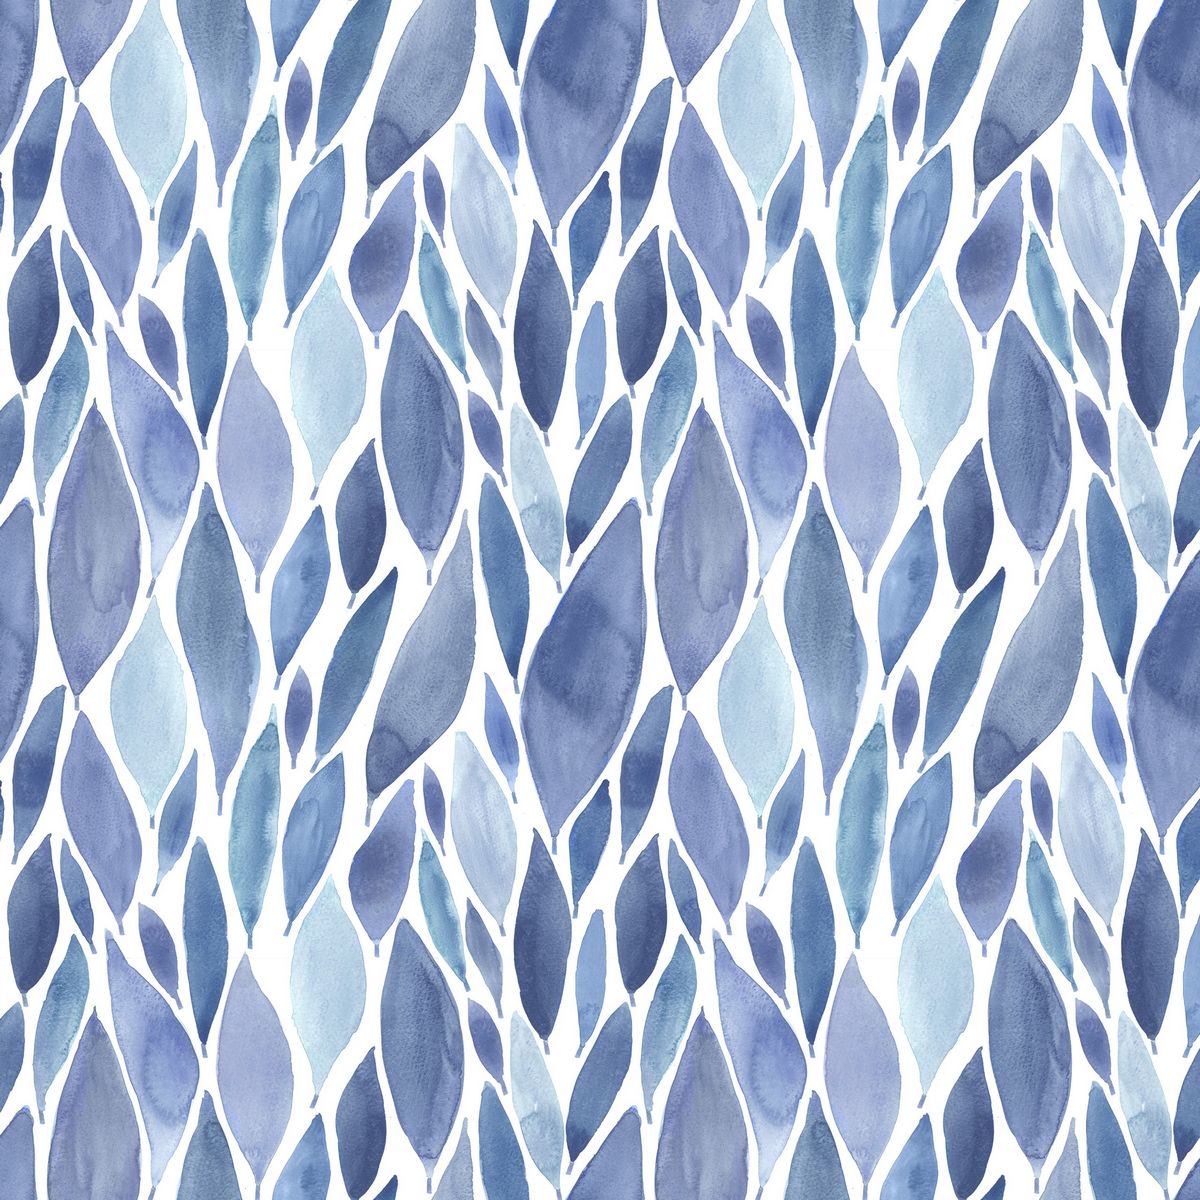 Koyo Cobalt Fabric by Voyage Maison